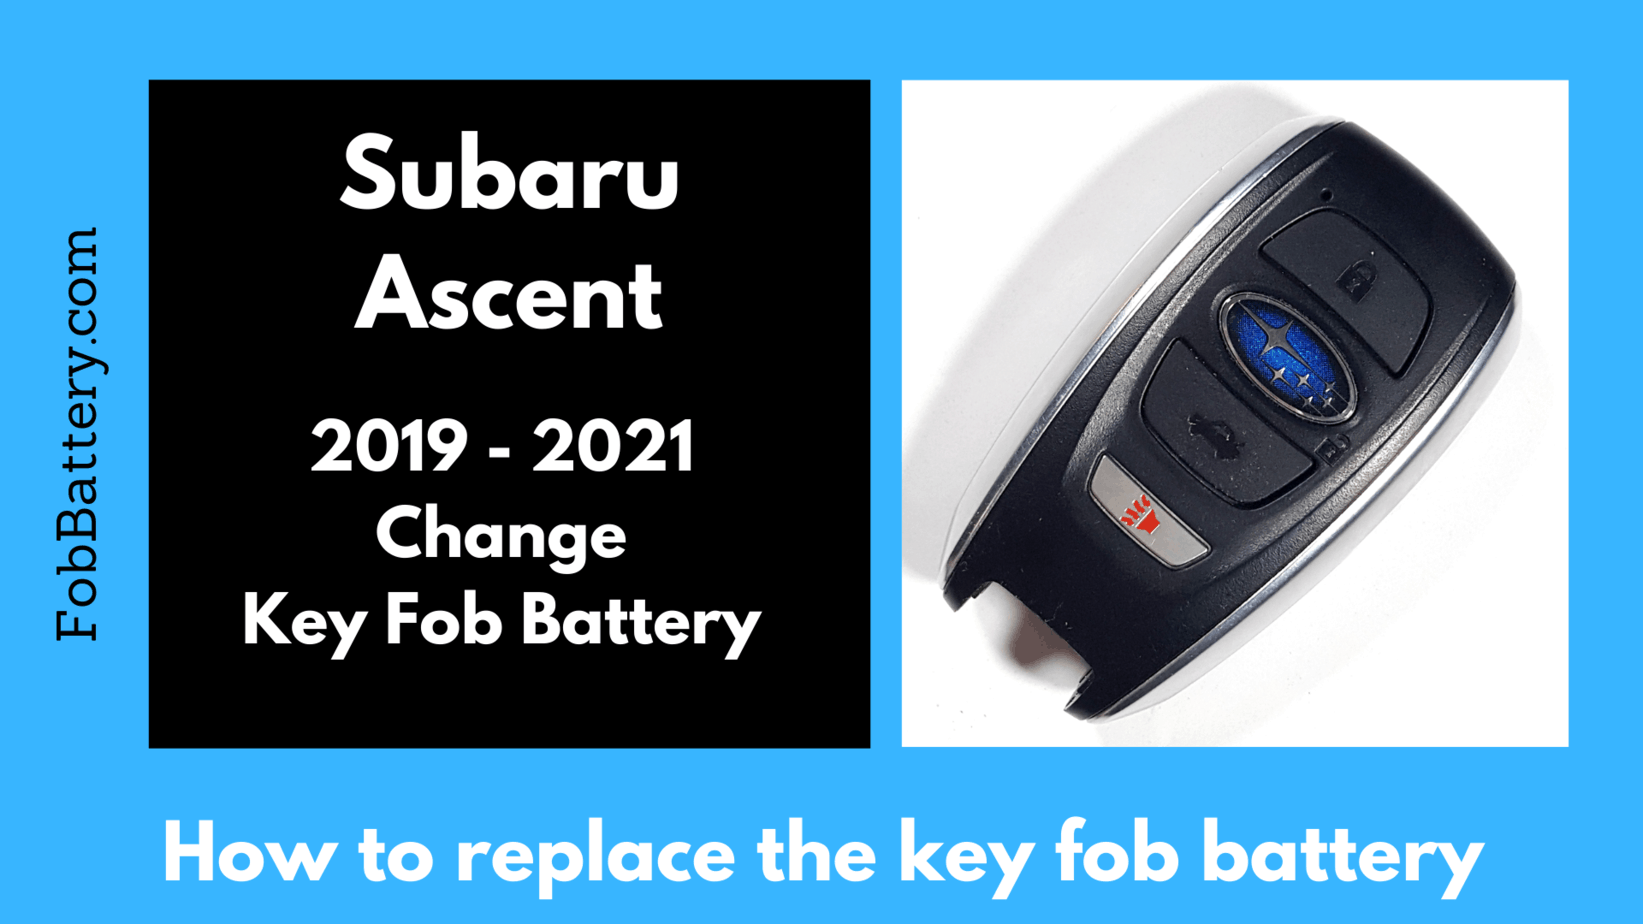 Subaru ascent key fob battery replacement